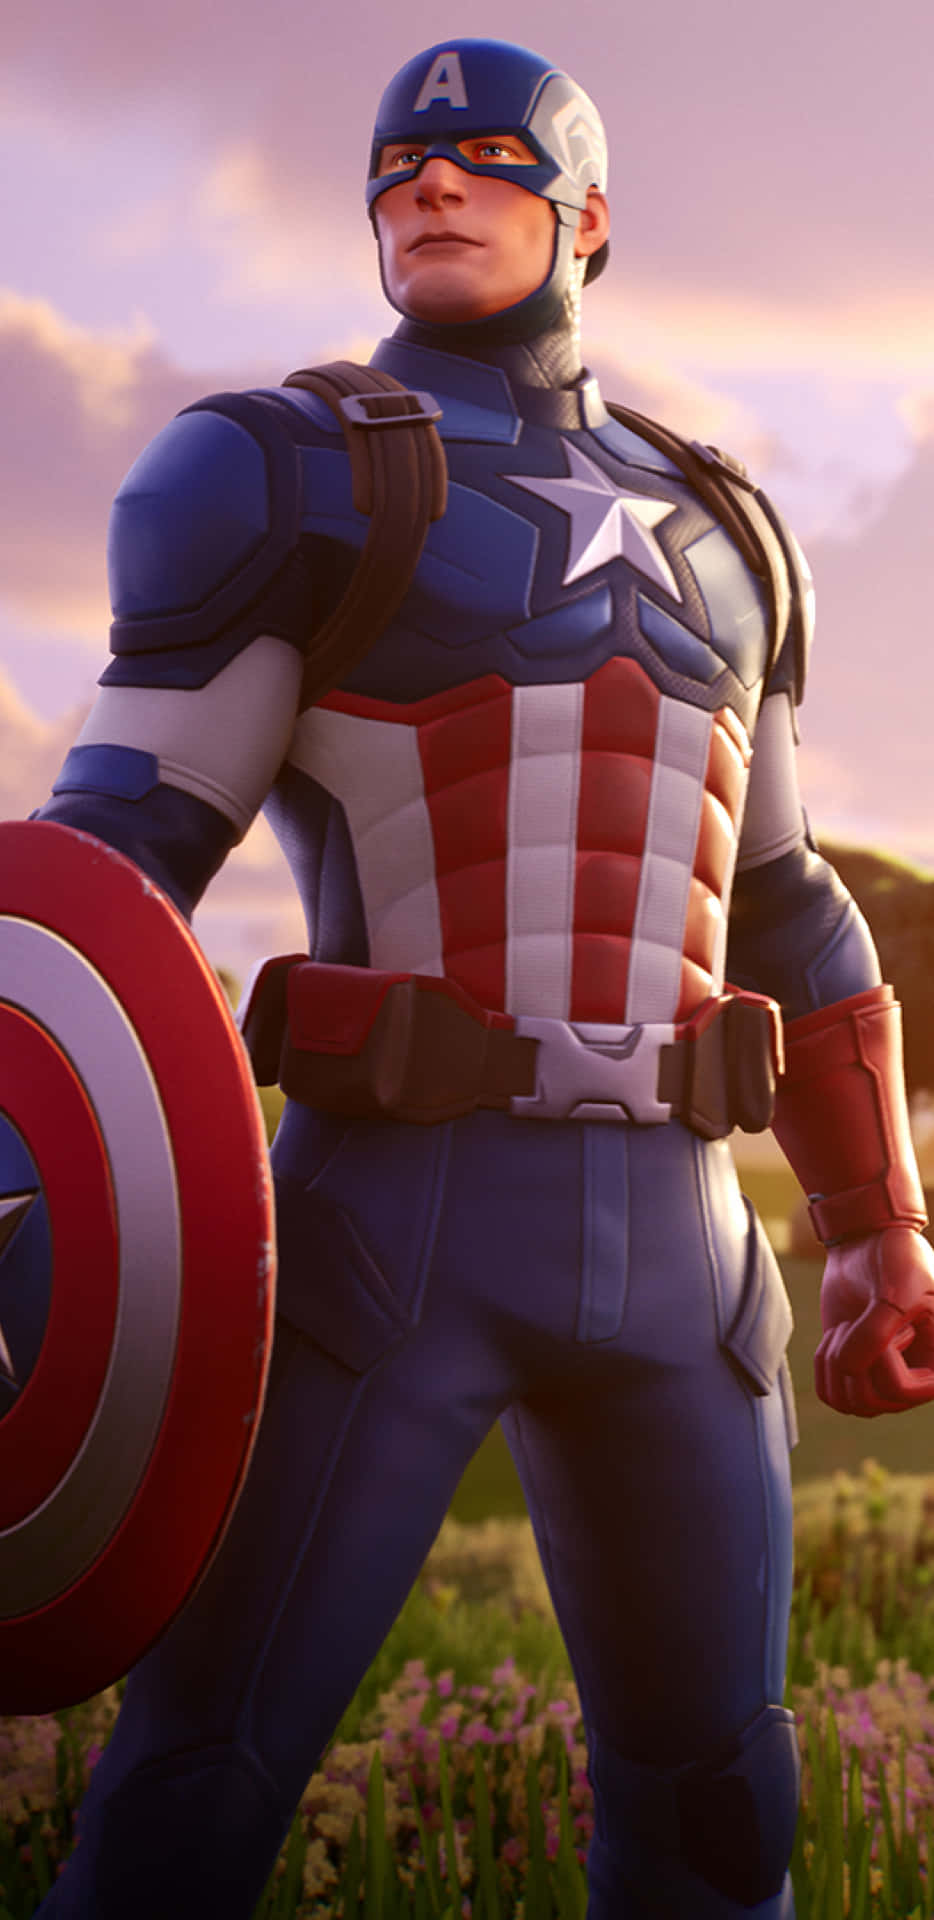 Pixel3xl Captain America Hintergrund Fortnite Skin